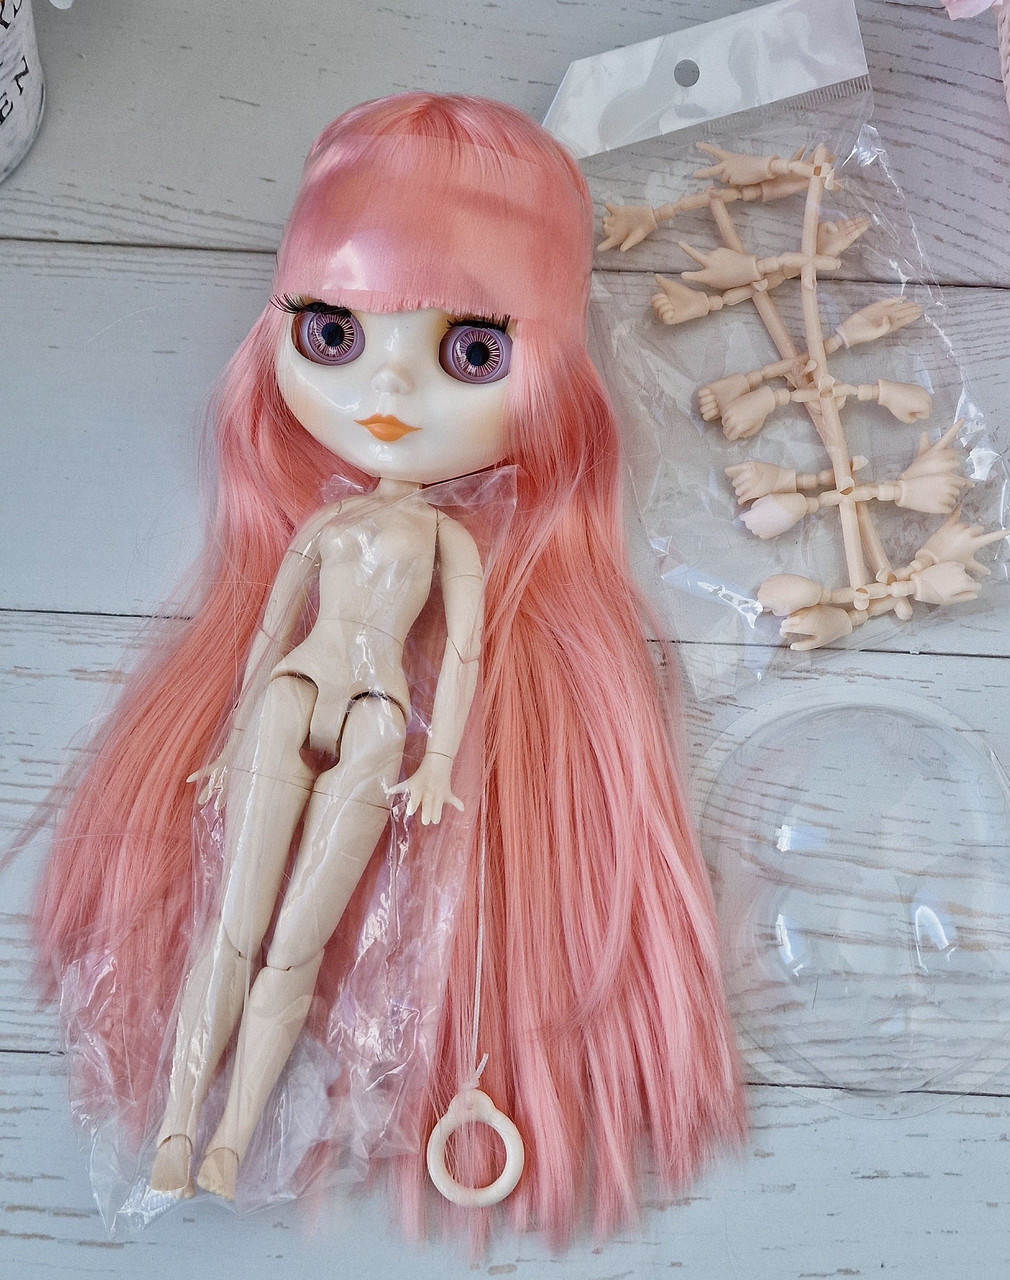 Шарнірна Лялька Блайз Blythe 30 см рожево-персикове волосся без одягу 4 кольори очей